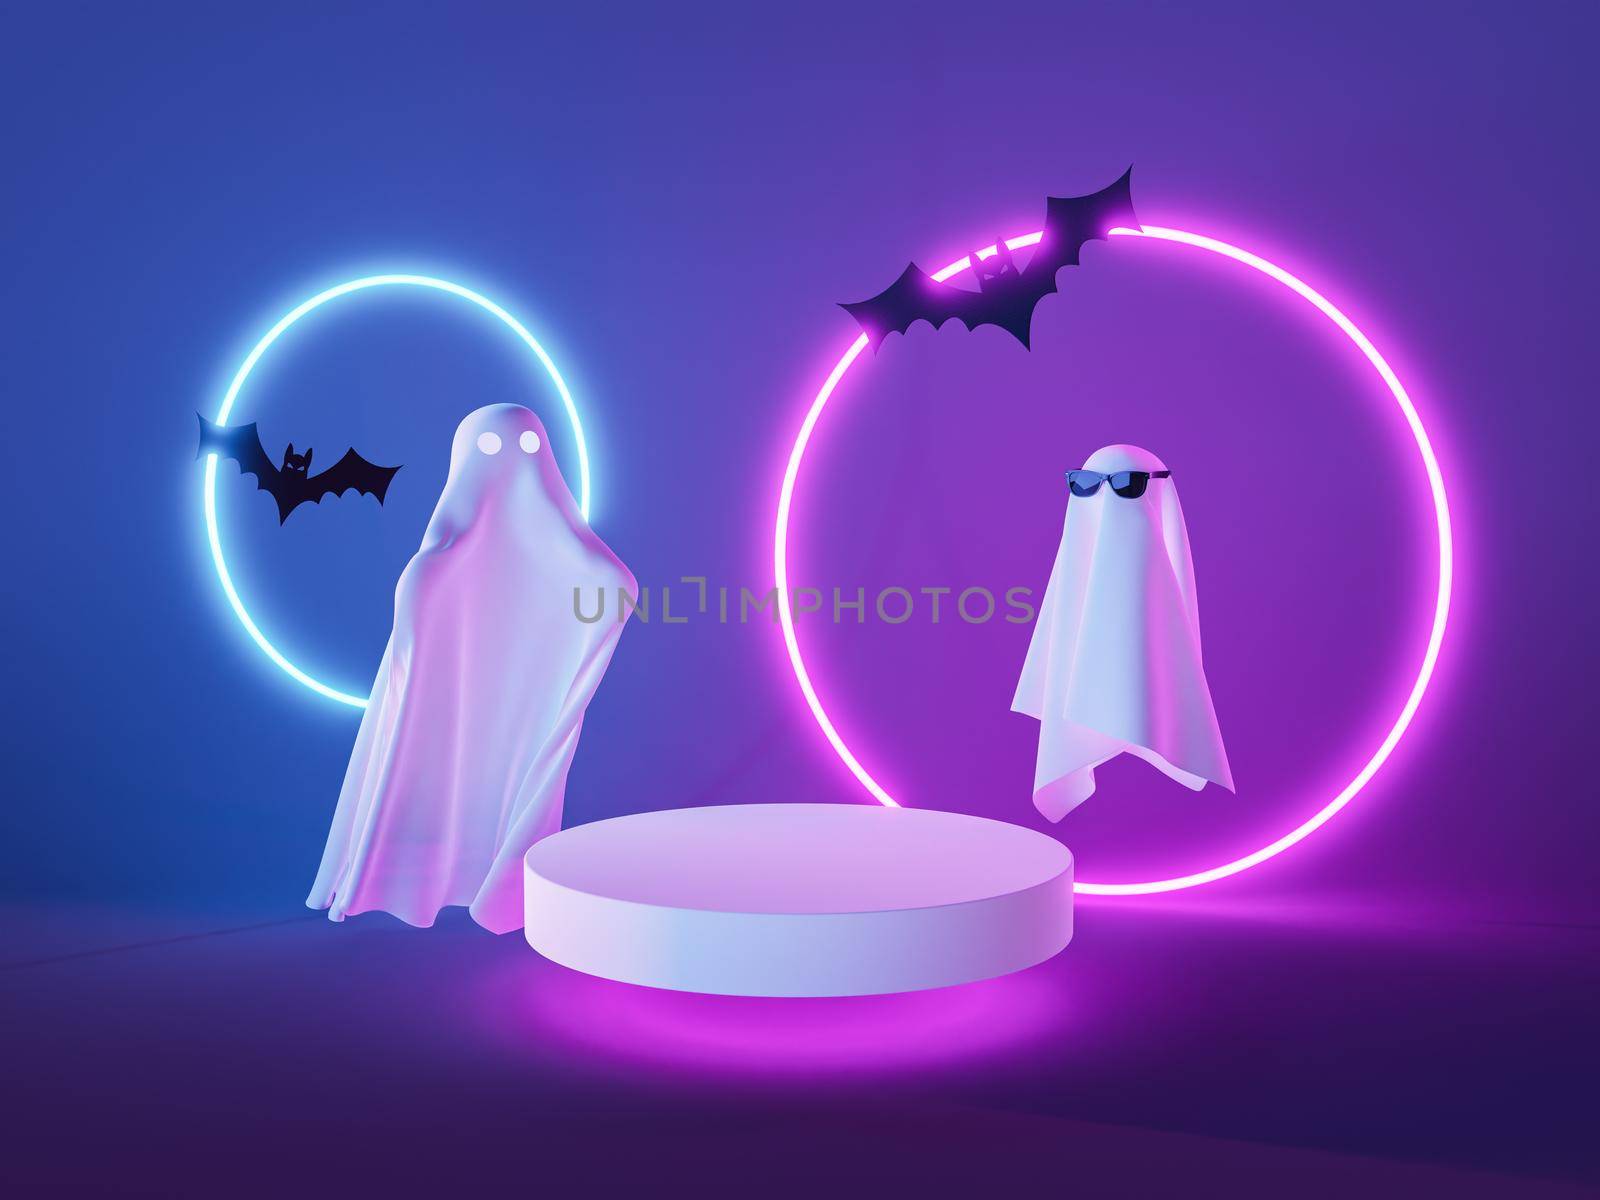 White ghosts levitating in neon studio near illuminated rings by asolano